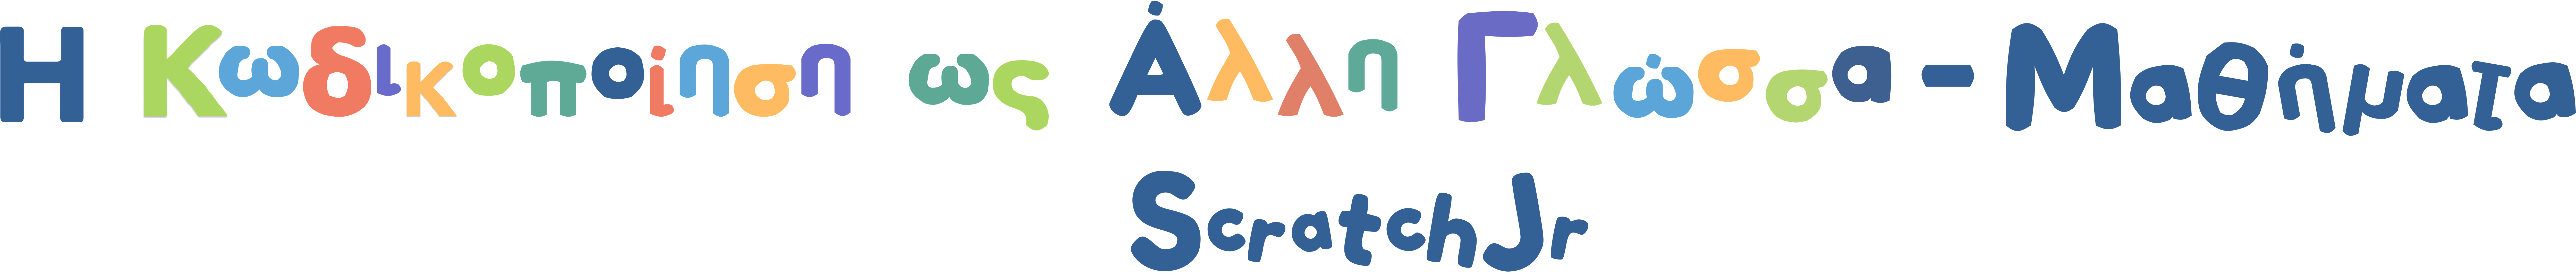 Coding as Another Language Scratch Junior Curriculum Logo.